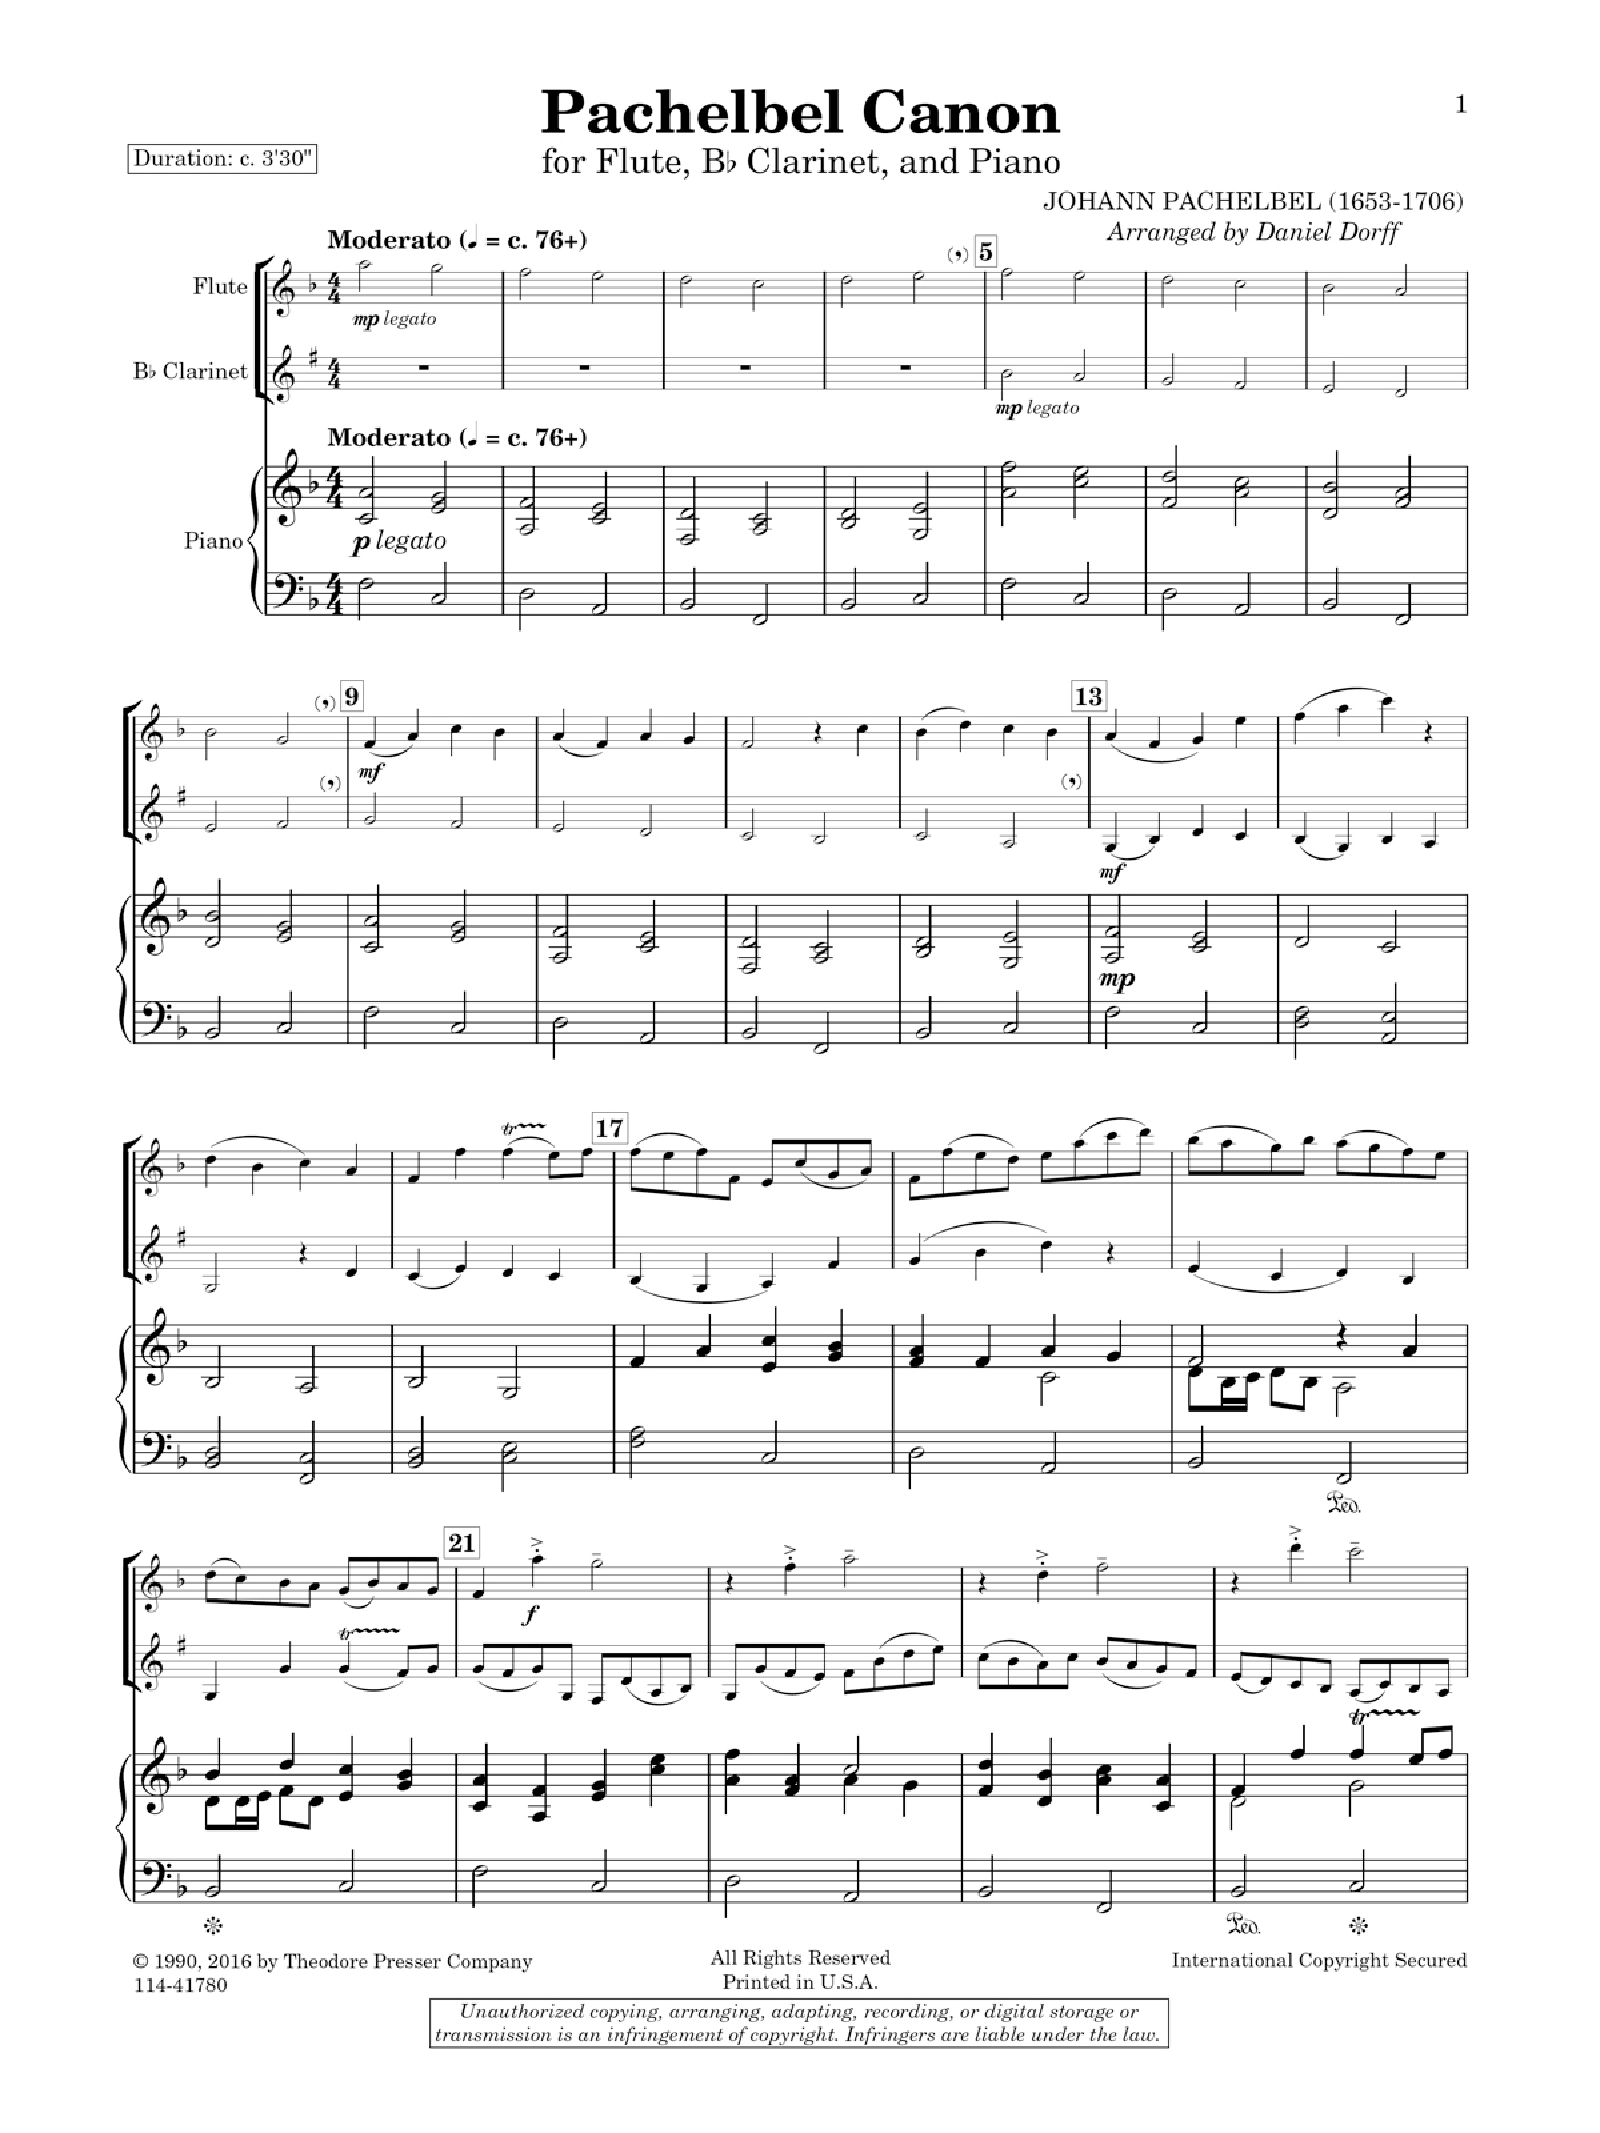 Pachelbel Canon Flute Clarinet and Piano